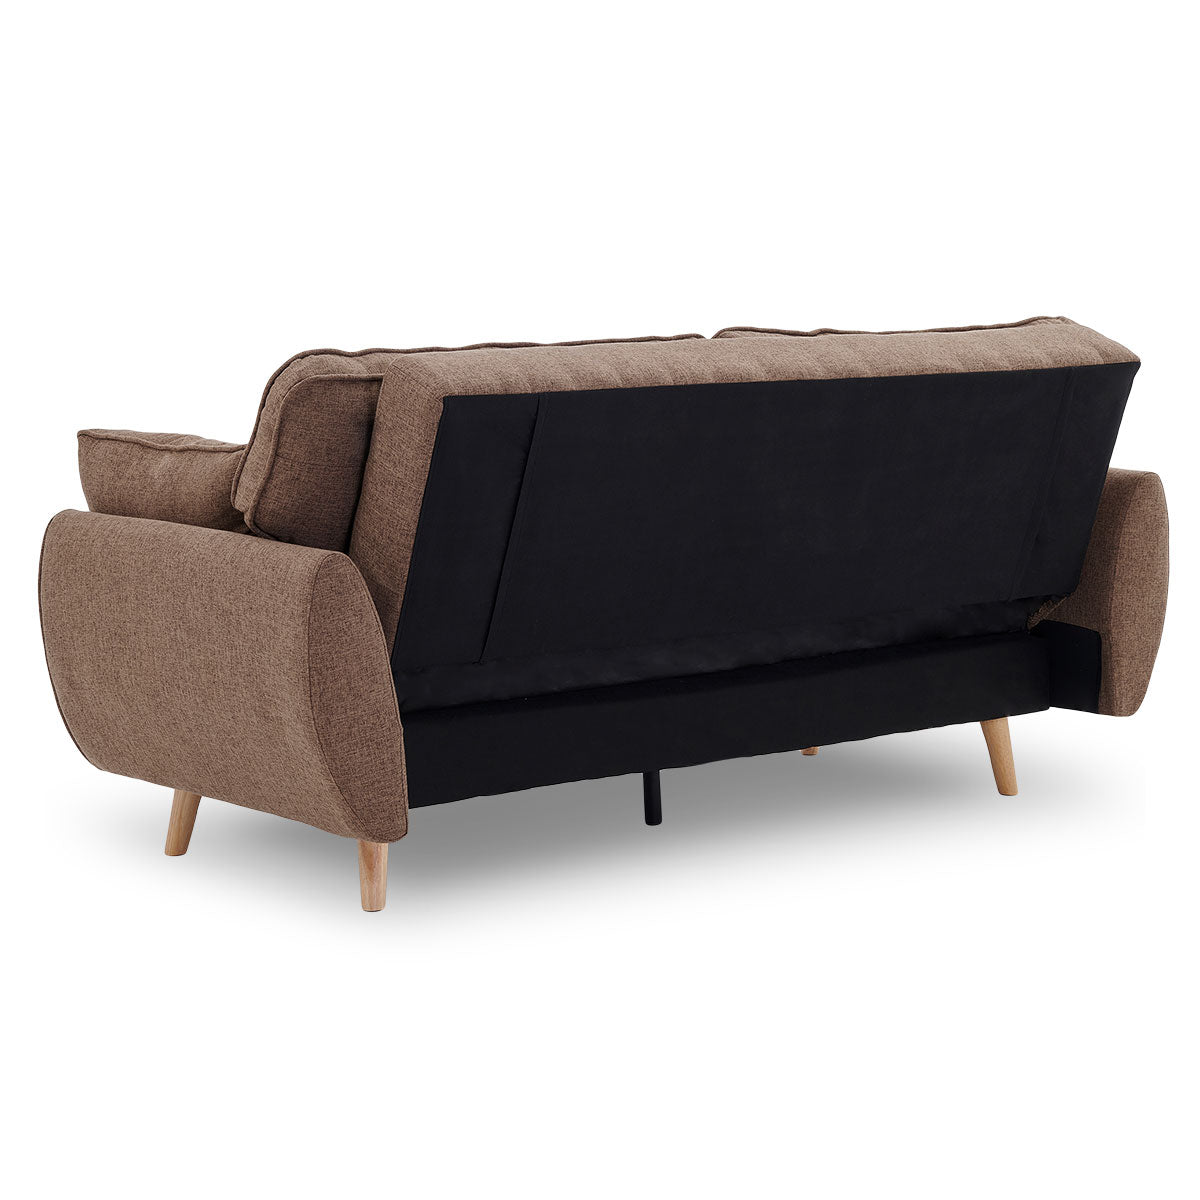 Sarantino 3 Seater Modular Linen Fabric Sofa Bed Couch Futon - Brown